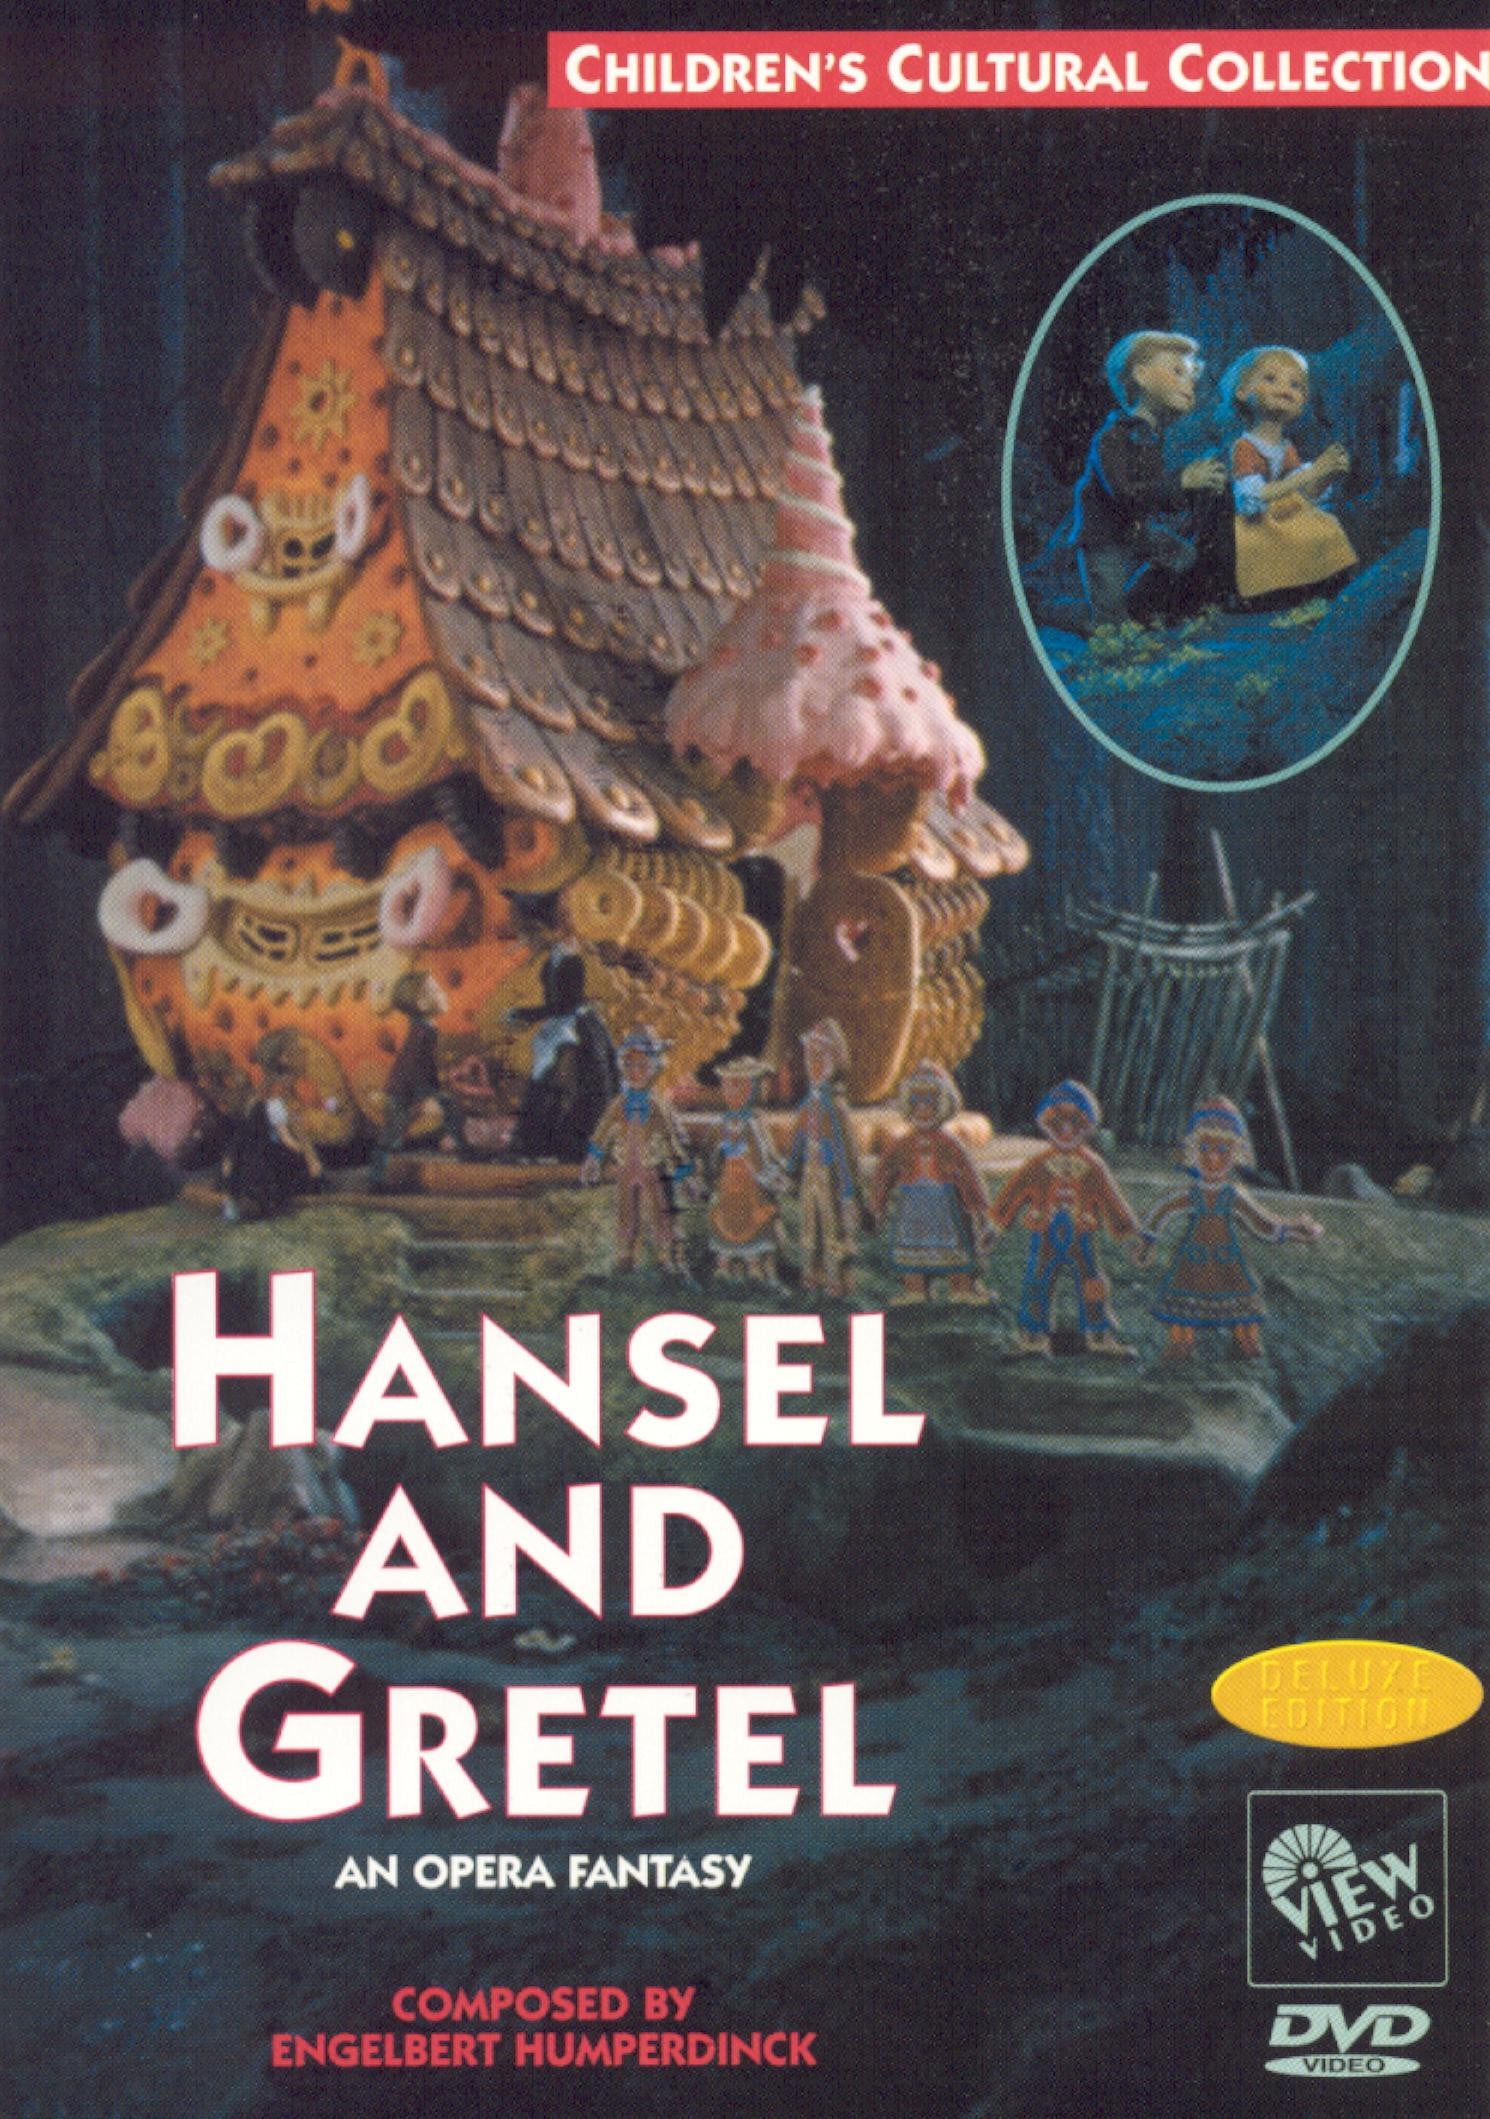 Movie Stills 1954 Lot of 11 Michael Myerberg Productions Hansel and Gretel